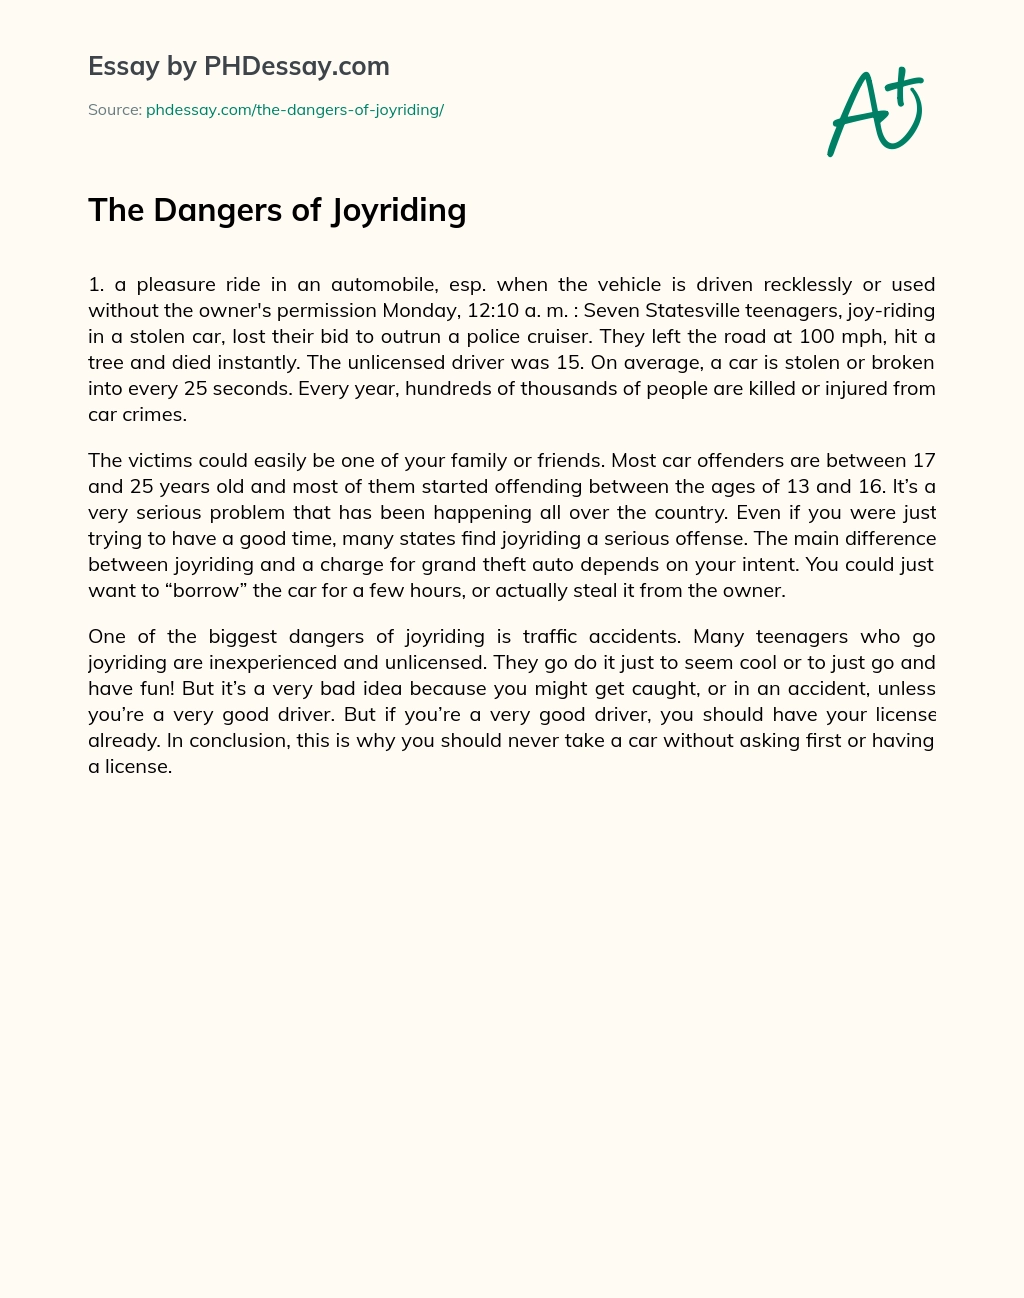 The Dangers of Joyriding essay